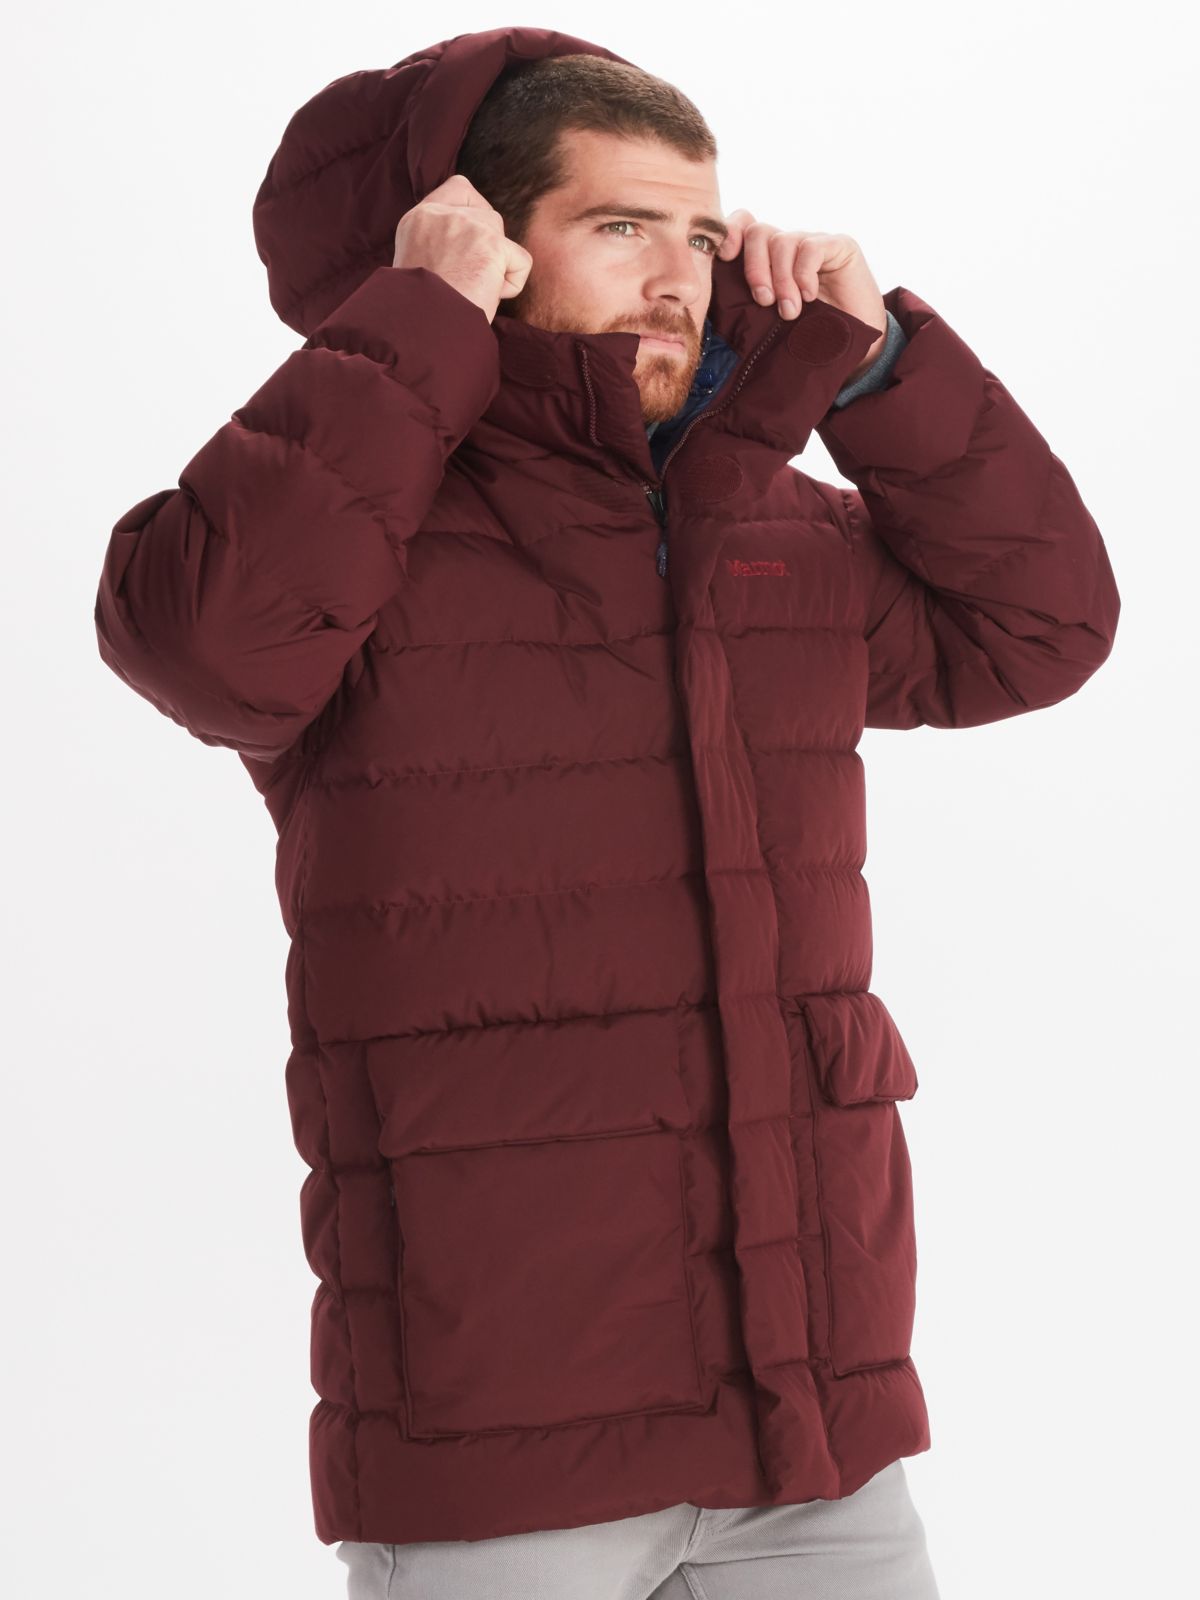 male model pulling up hoodie of winter jacket